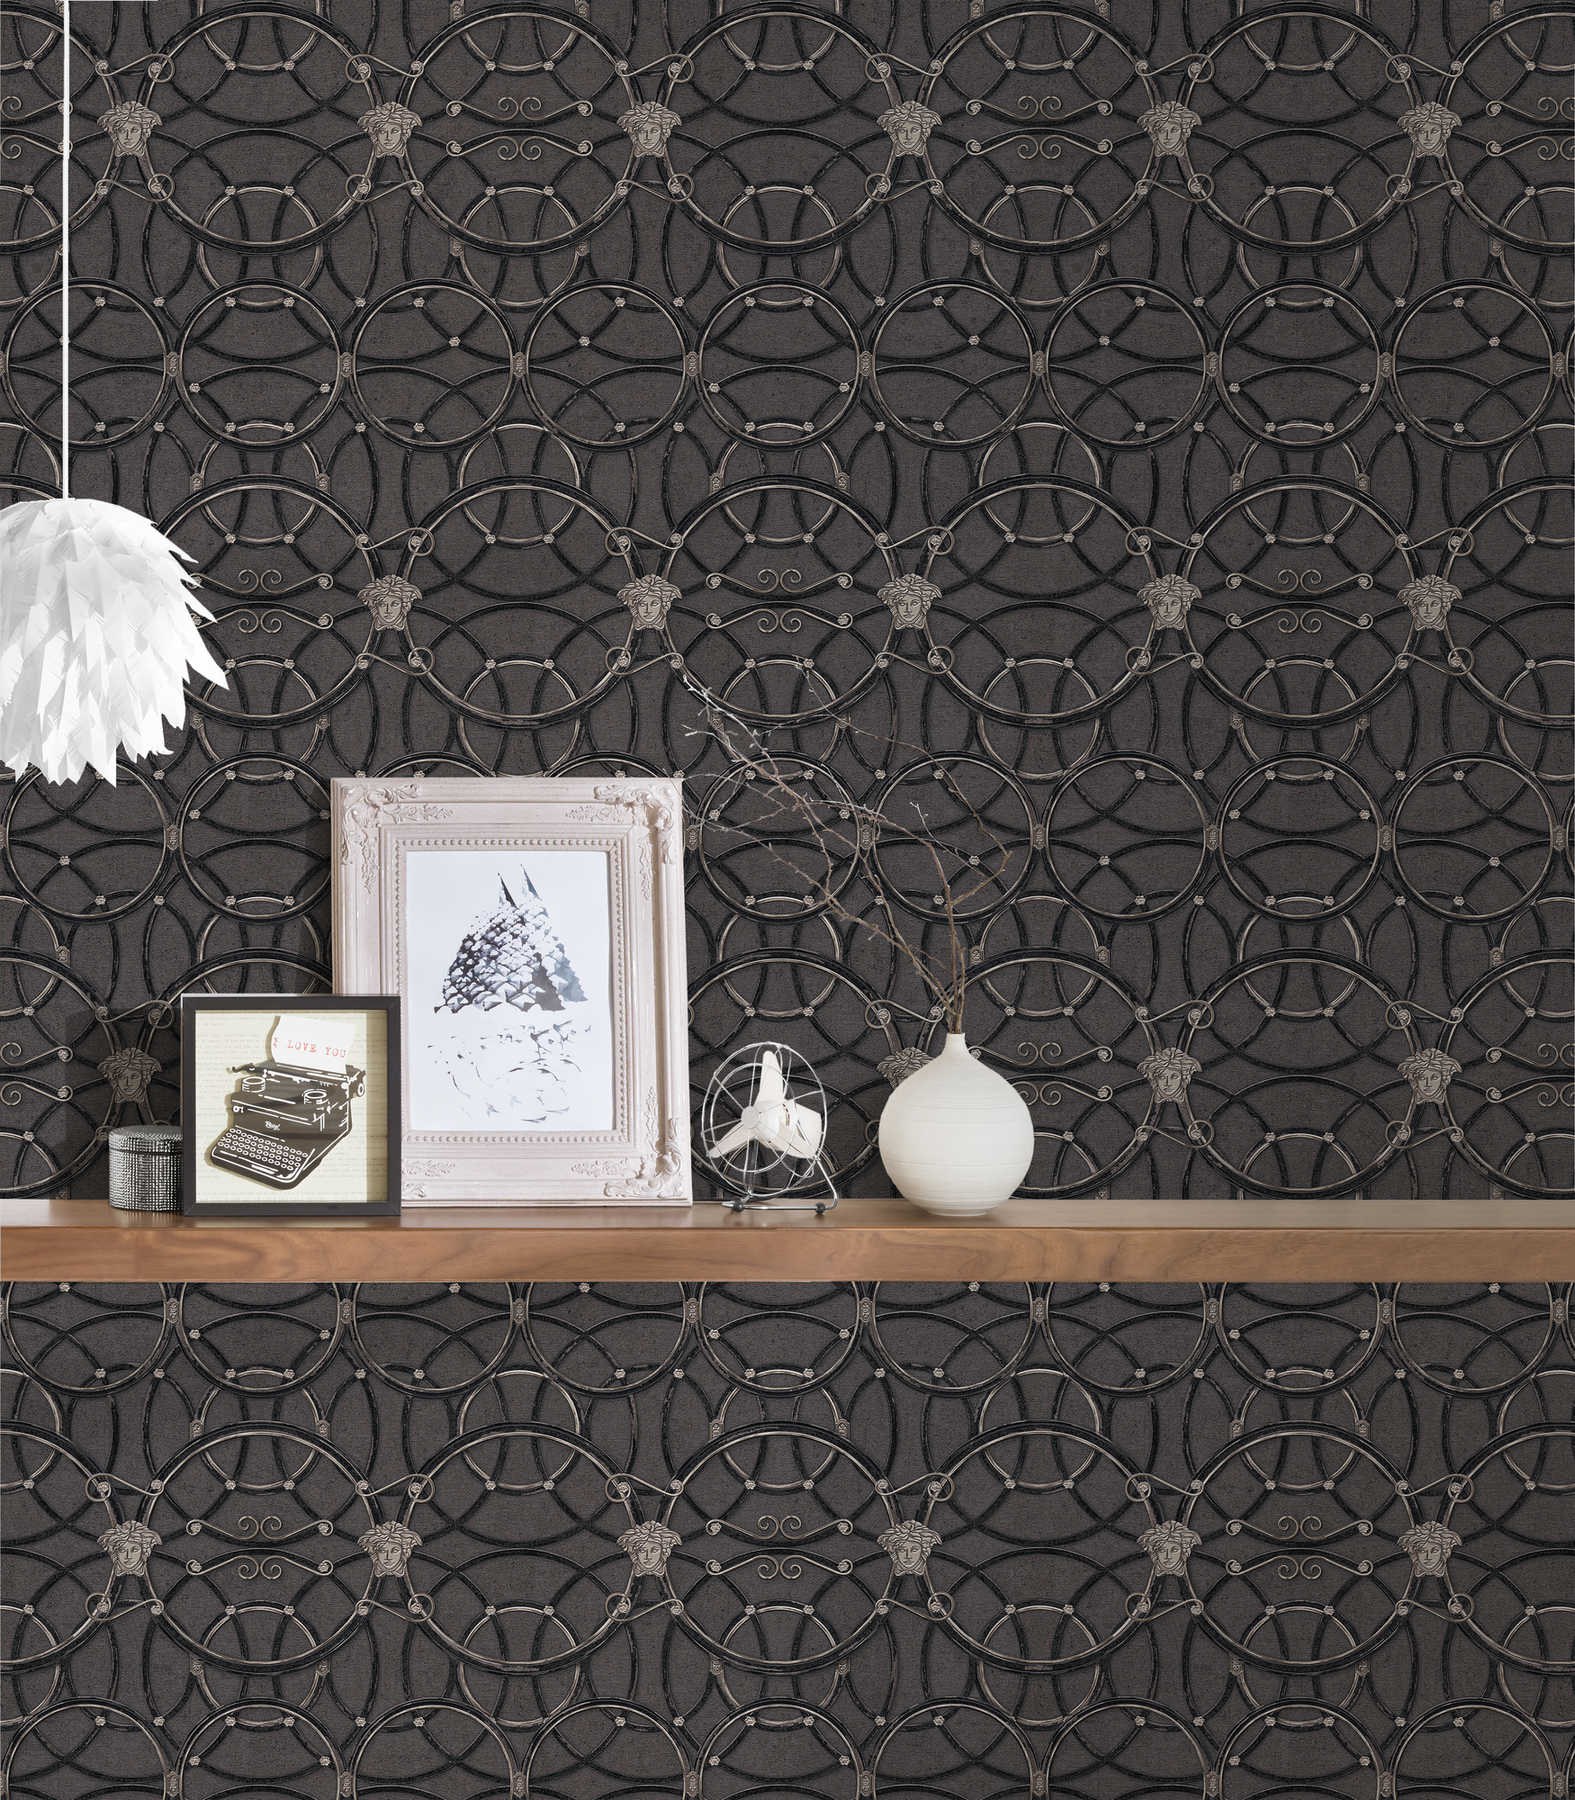             VERSACE Home wallpaper circle pattern, metallic effect - silver, black
        